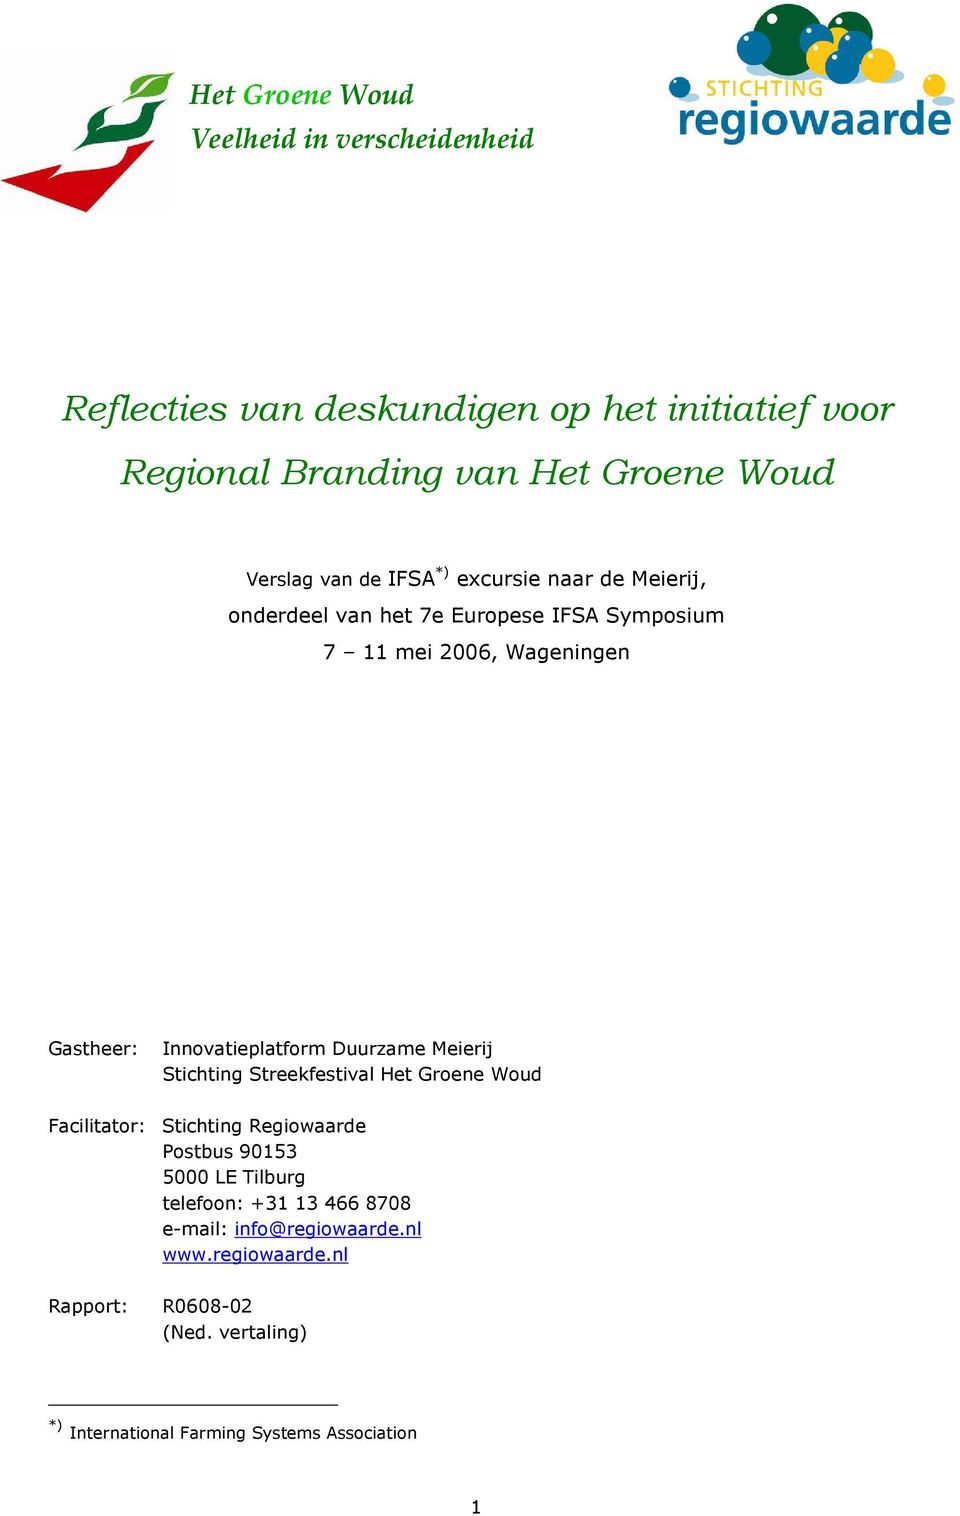 Duurzame Meierij Stichting Streekfestival Het Groene Woud Facilitator: Stichting Regiowaarde Postbus 90153 5000 LE Tilburg telefoon: +31 13